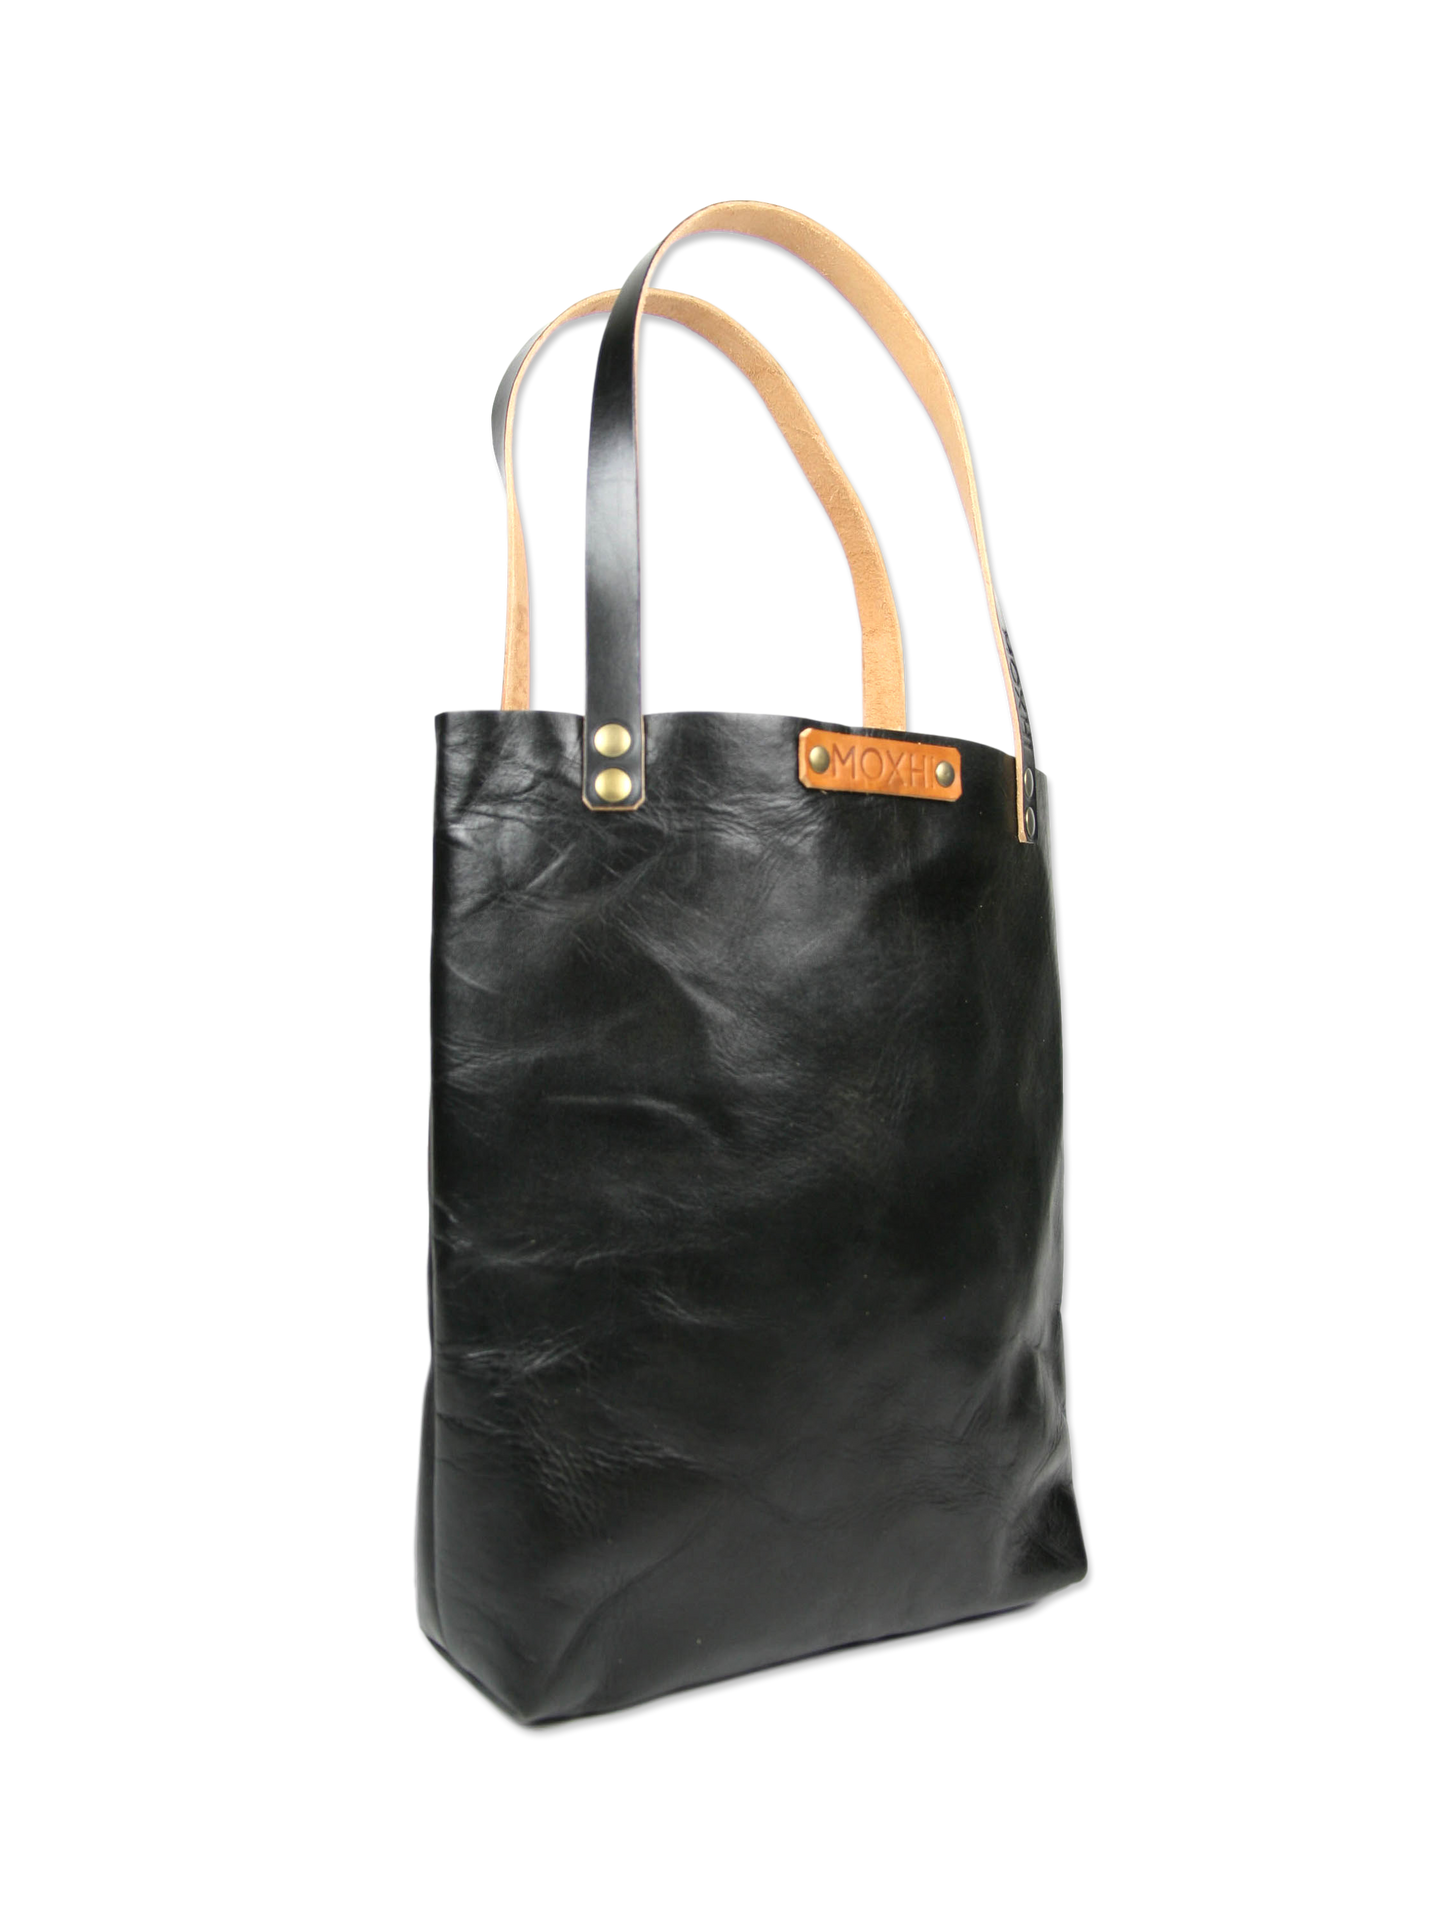 Handmade leather tote bag black